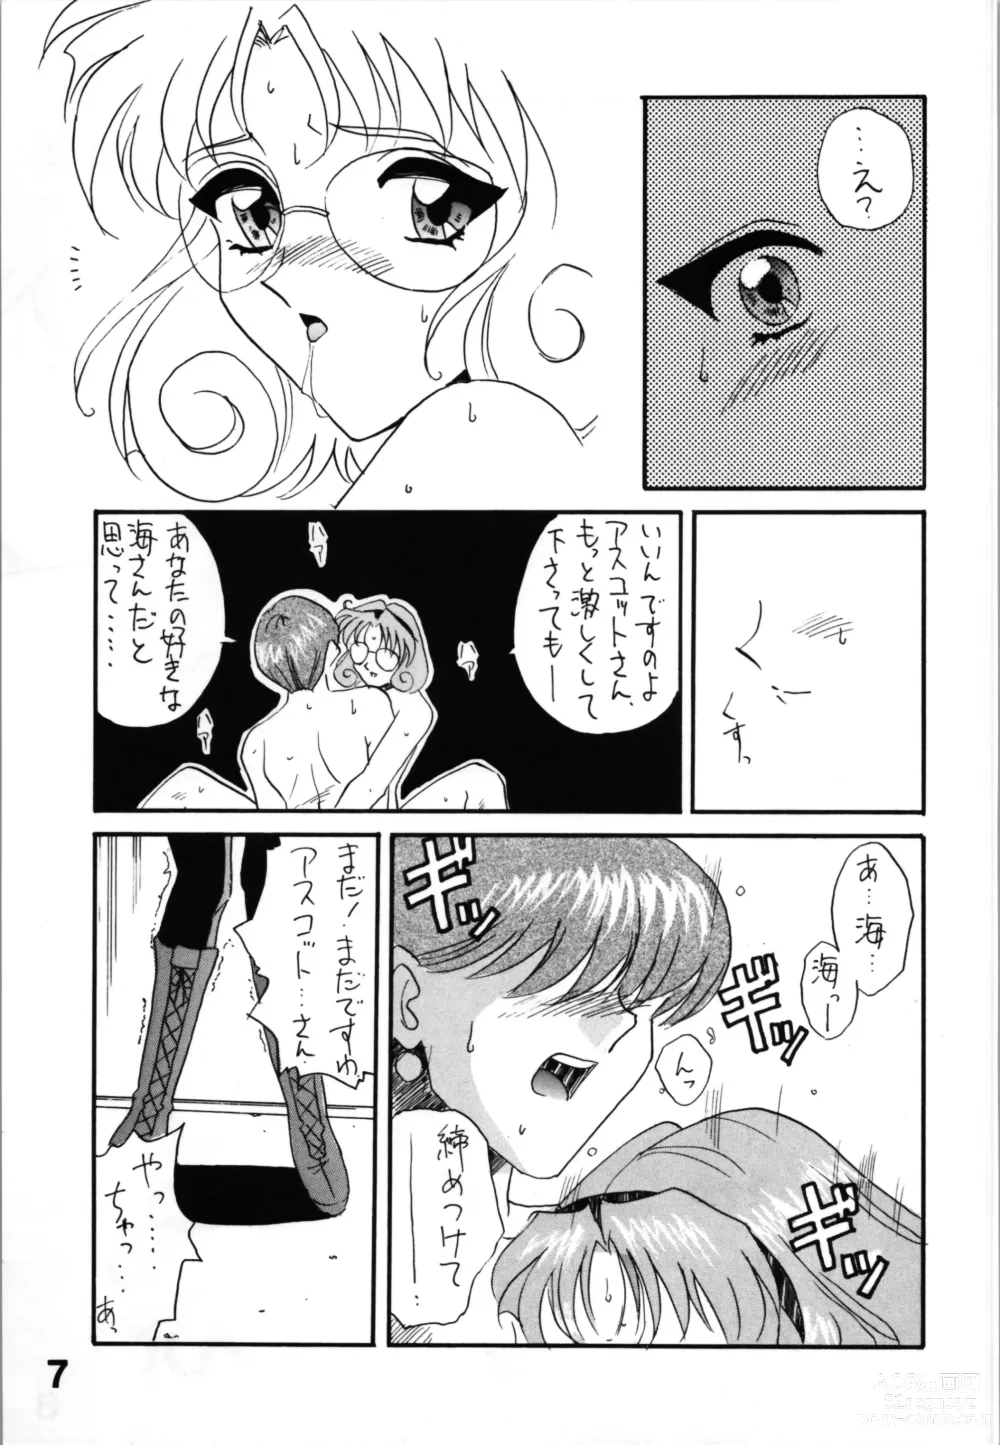 Page 7 of doujinshi [ACTIVA